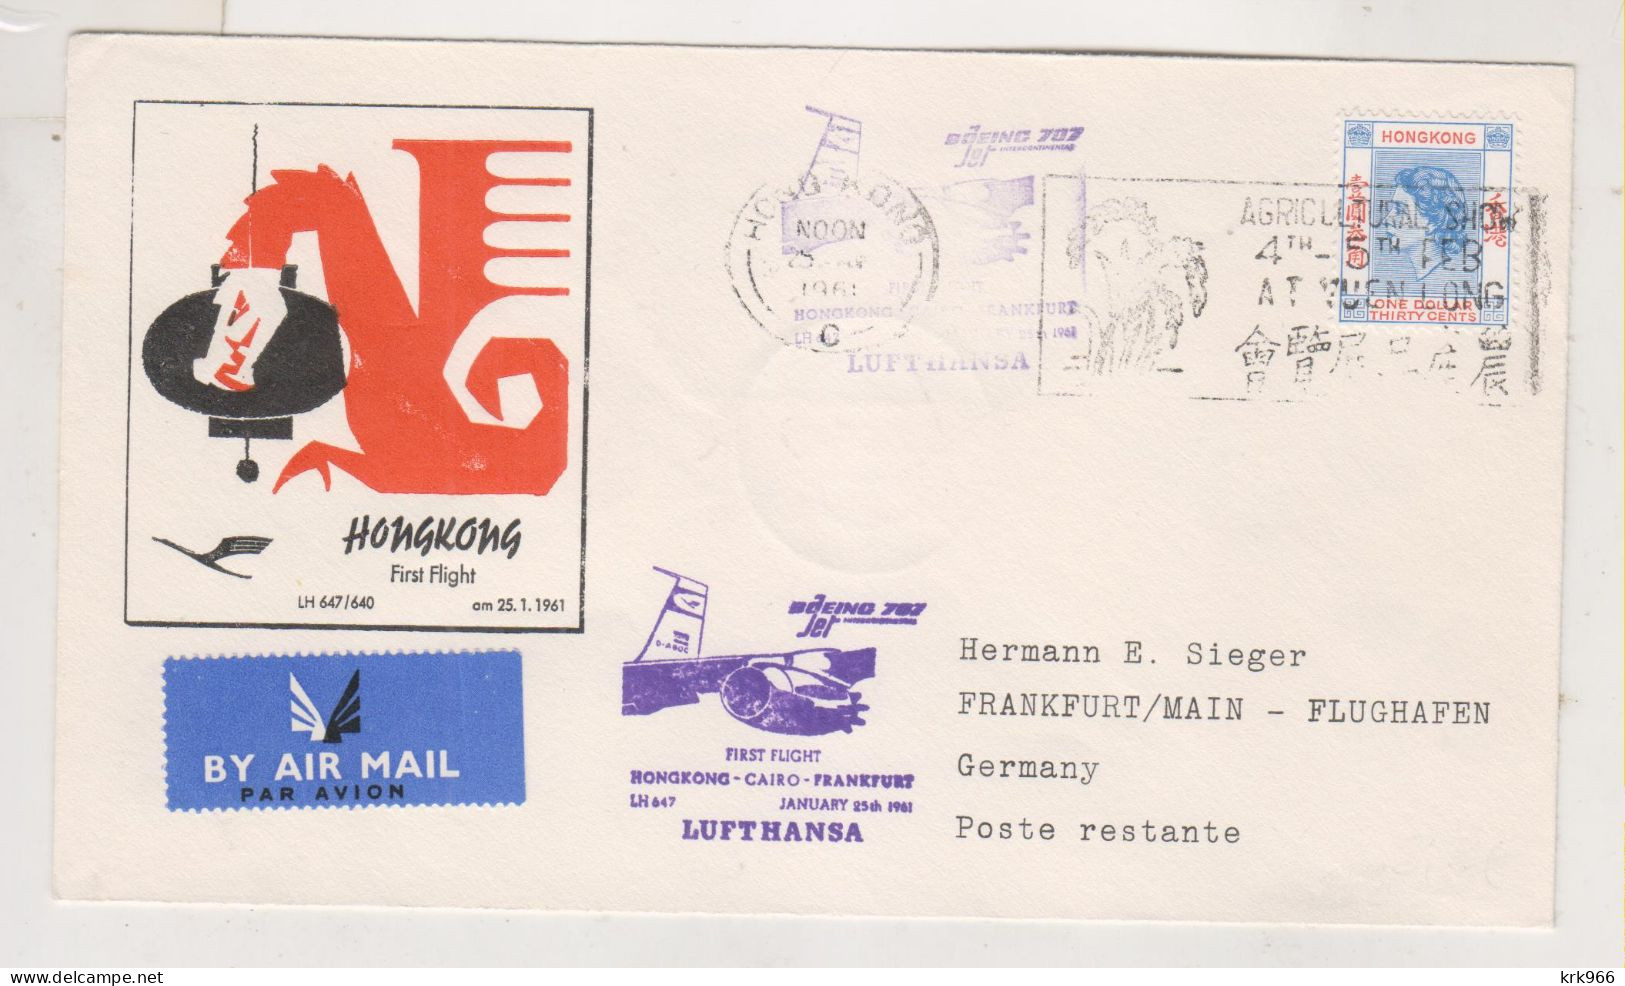 HONG KONG 1961 Nice Airmail Cover To Germany First Flight HONG KONG-CAIRO-FRANKFURT - Covers & Documents